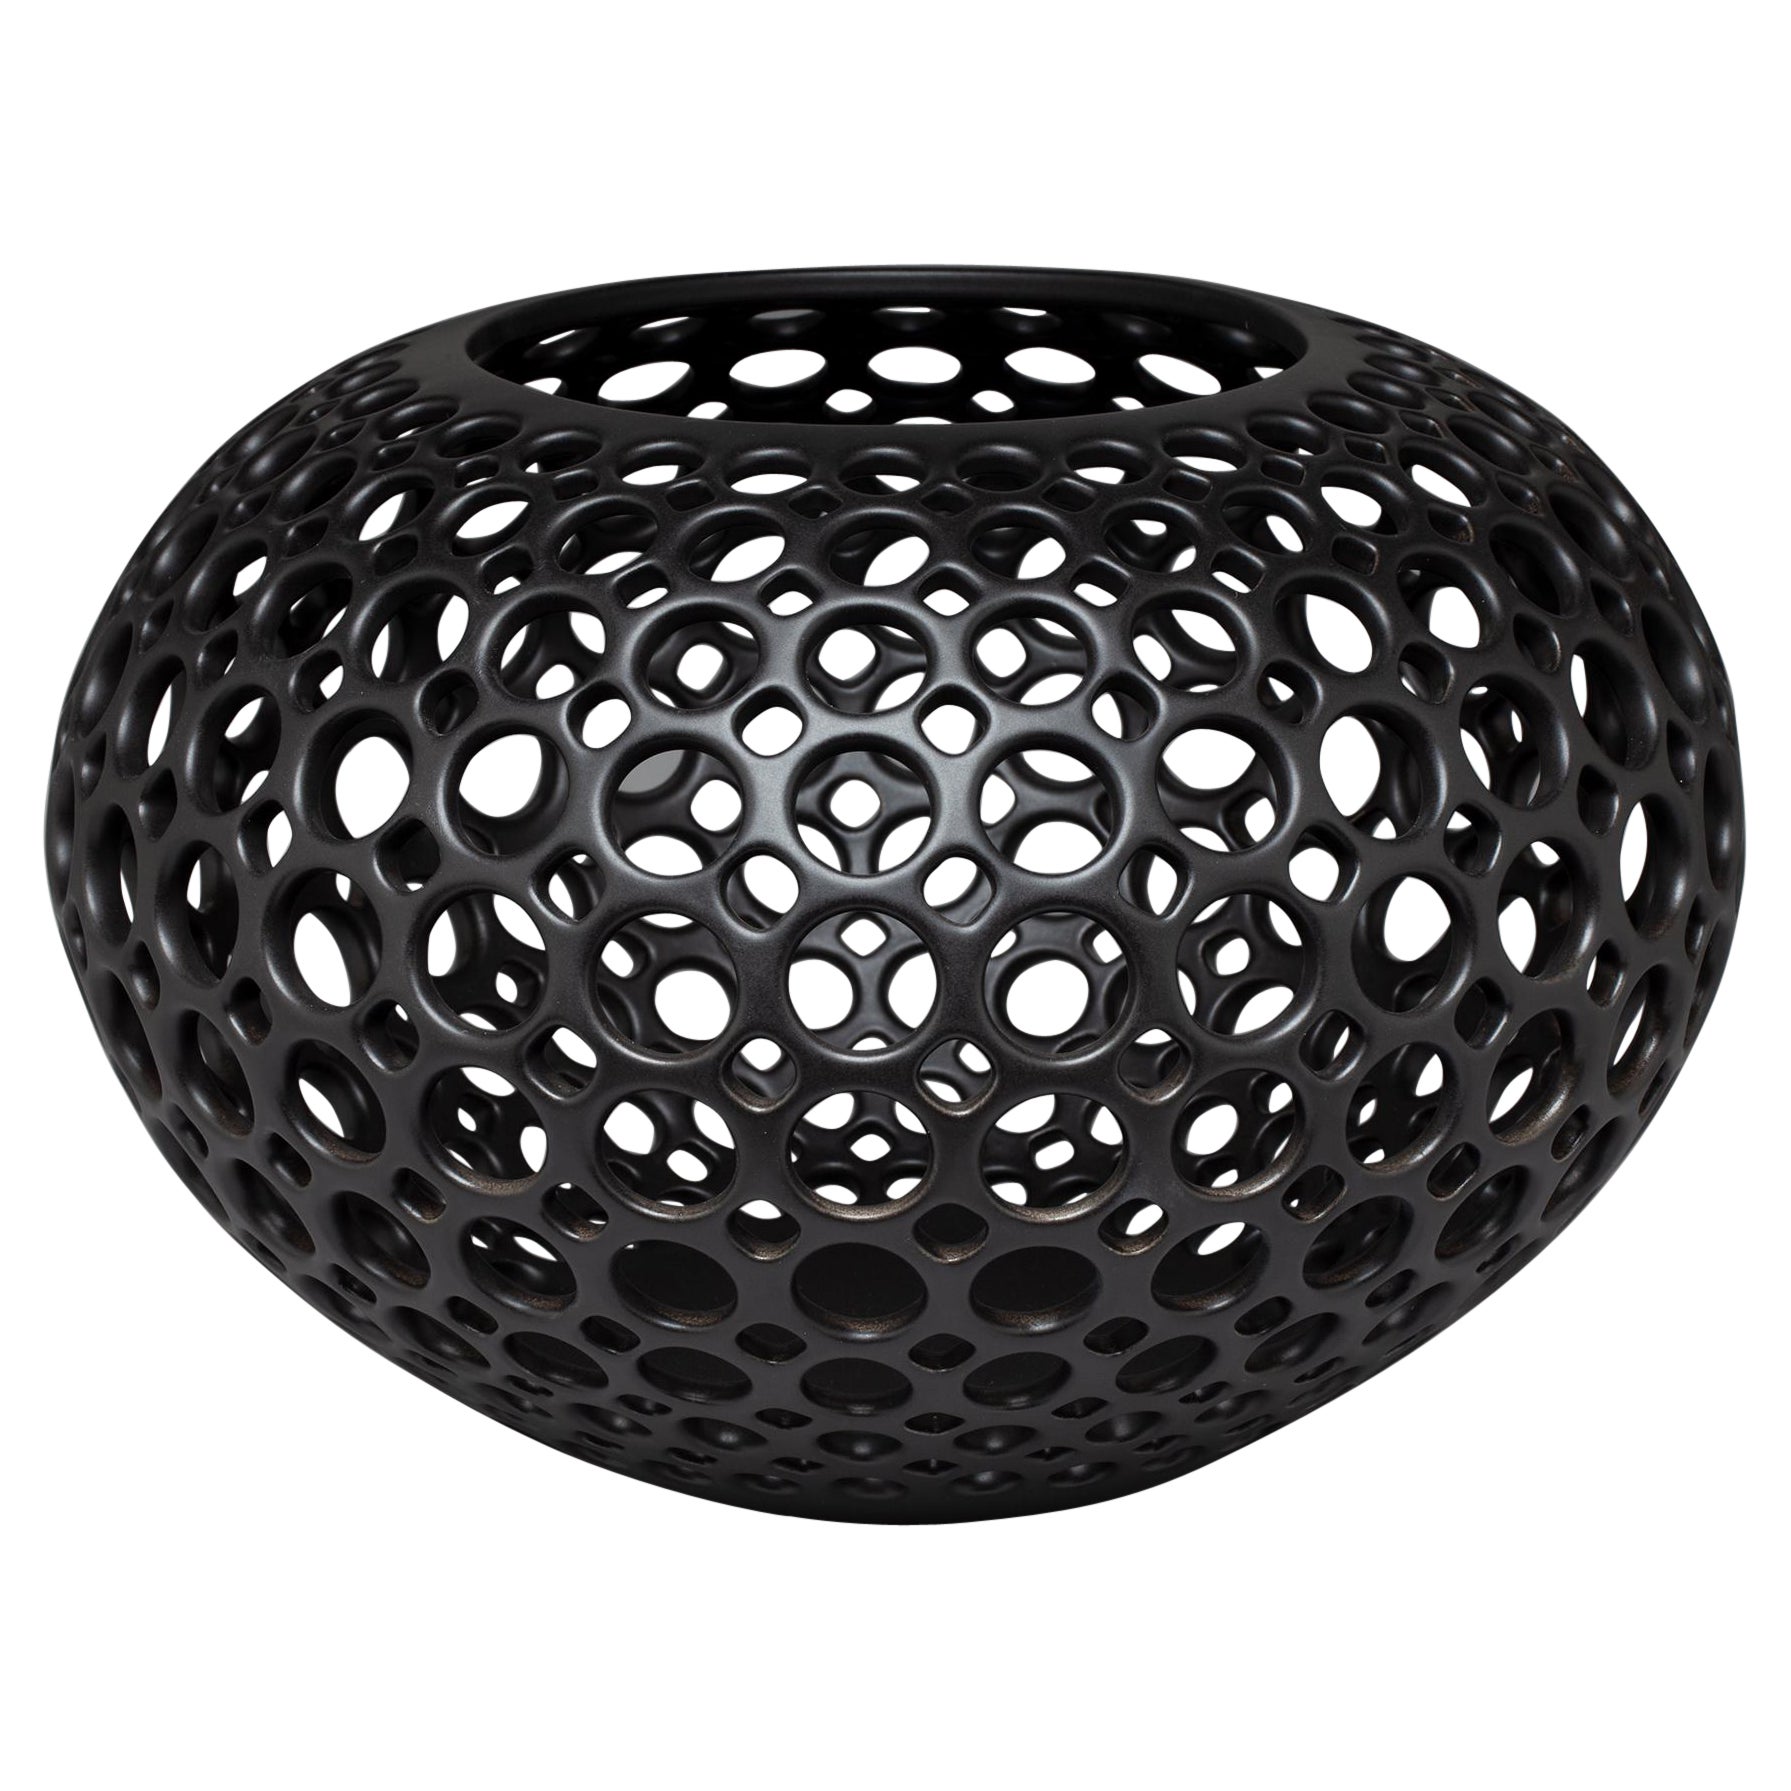 Pierced Ceramic Orb- Black For Sale